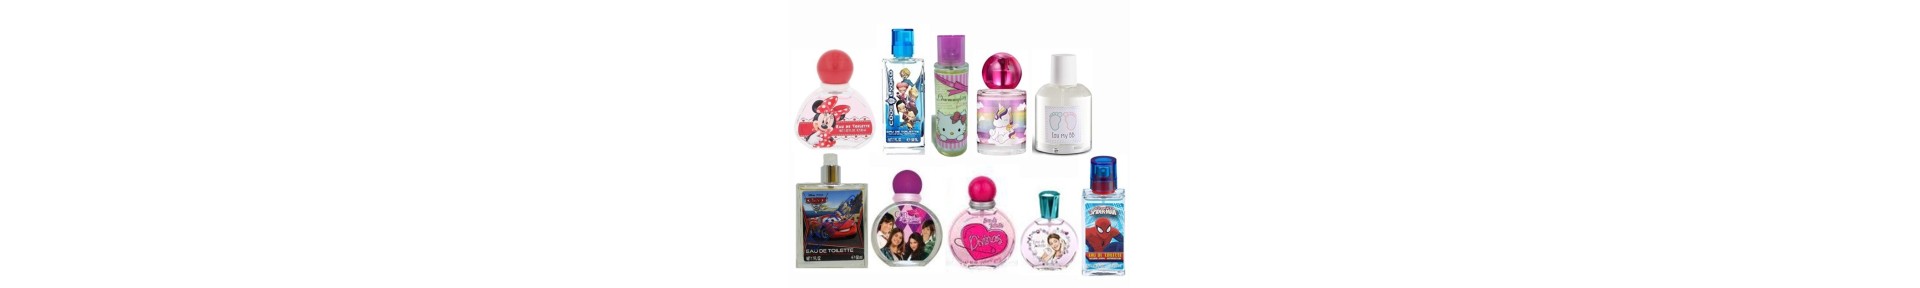 Infantil perfumes primeras marcas